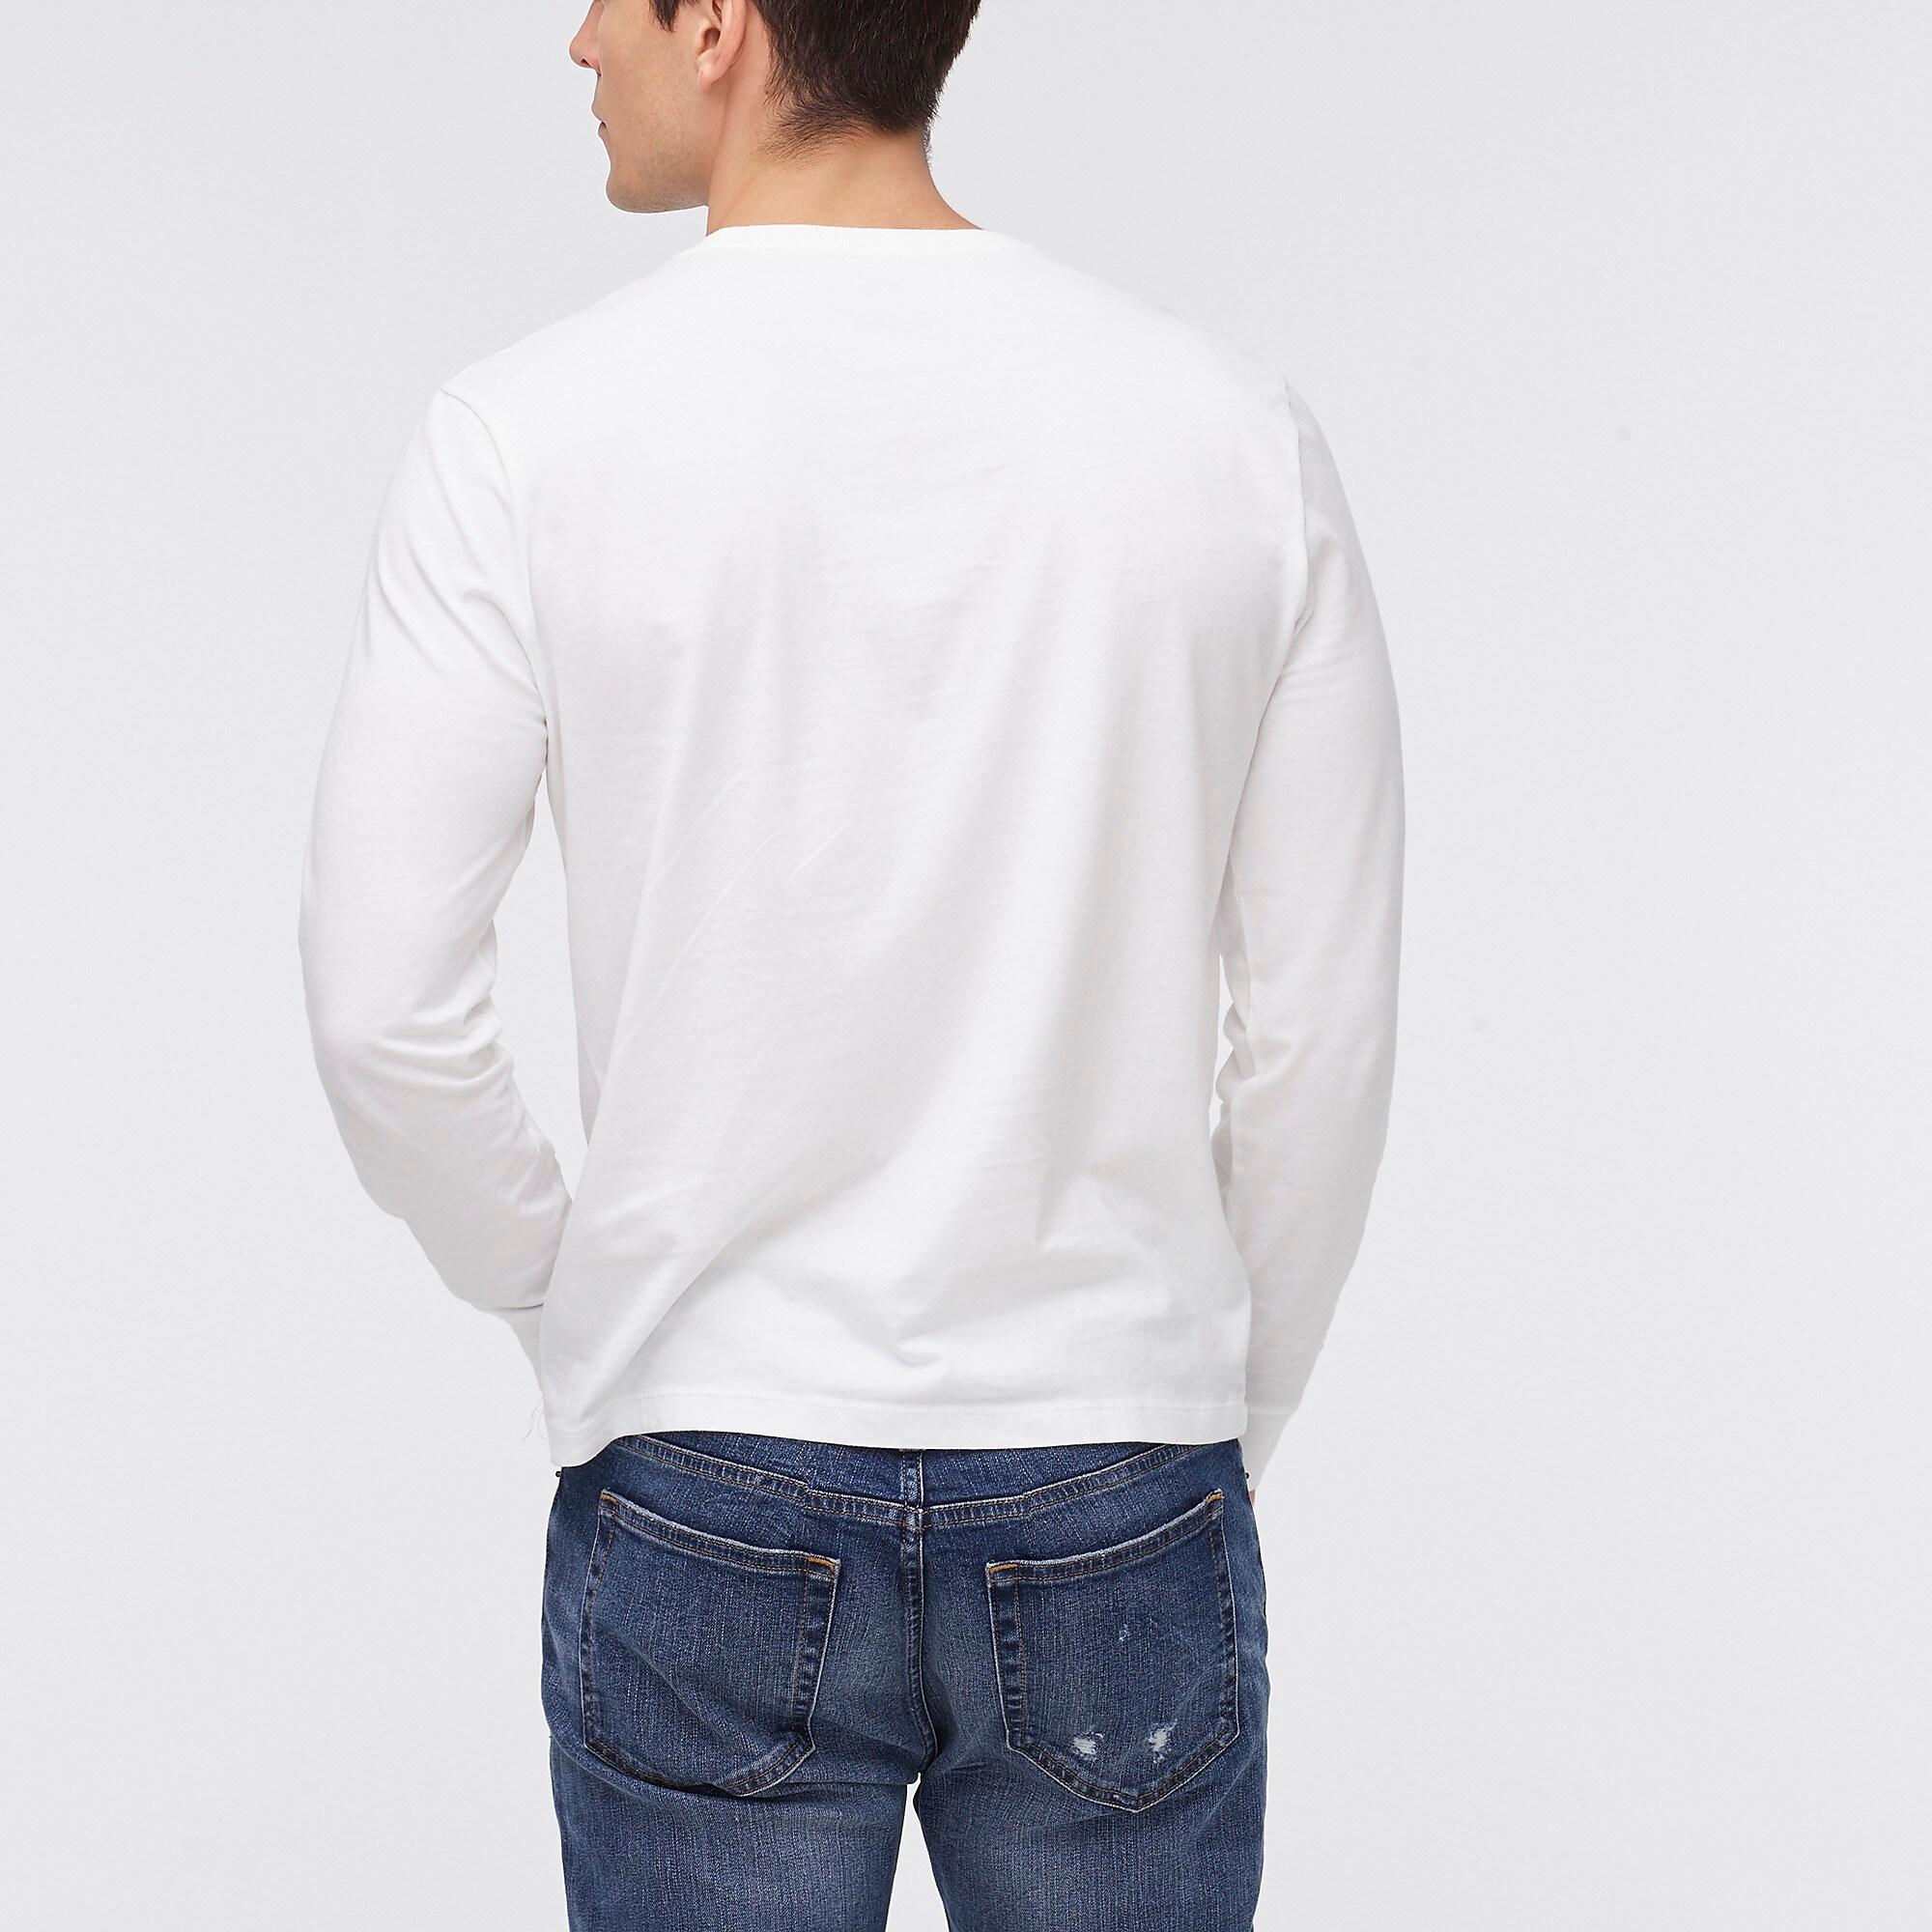 J.Crew Cotton Long-sleeve T-shirt in White for Men - Lyst